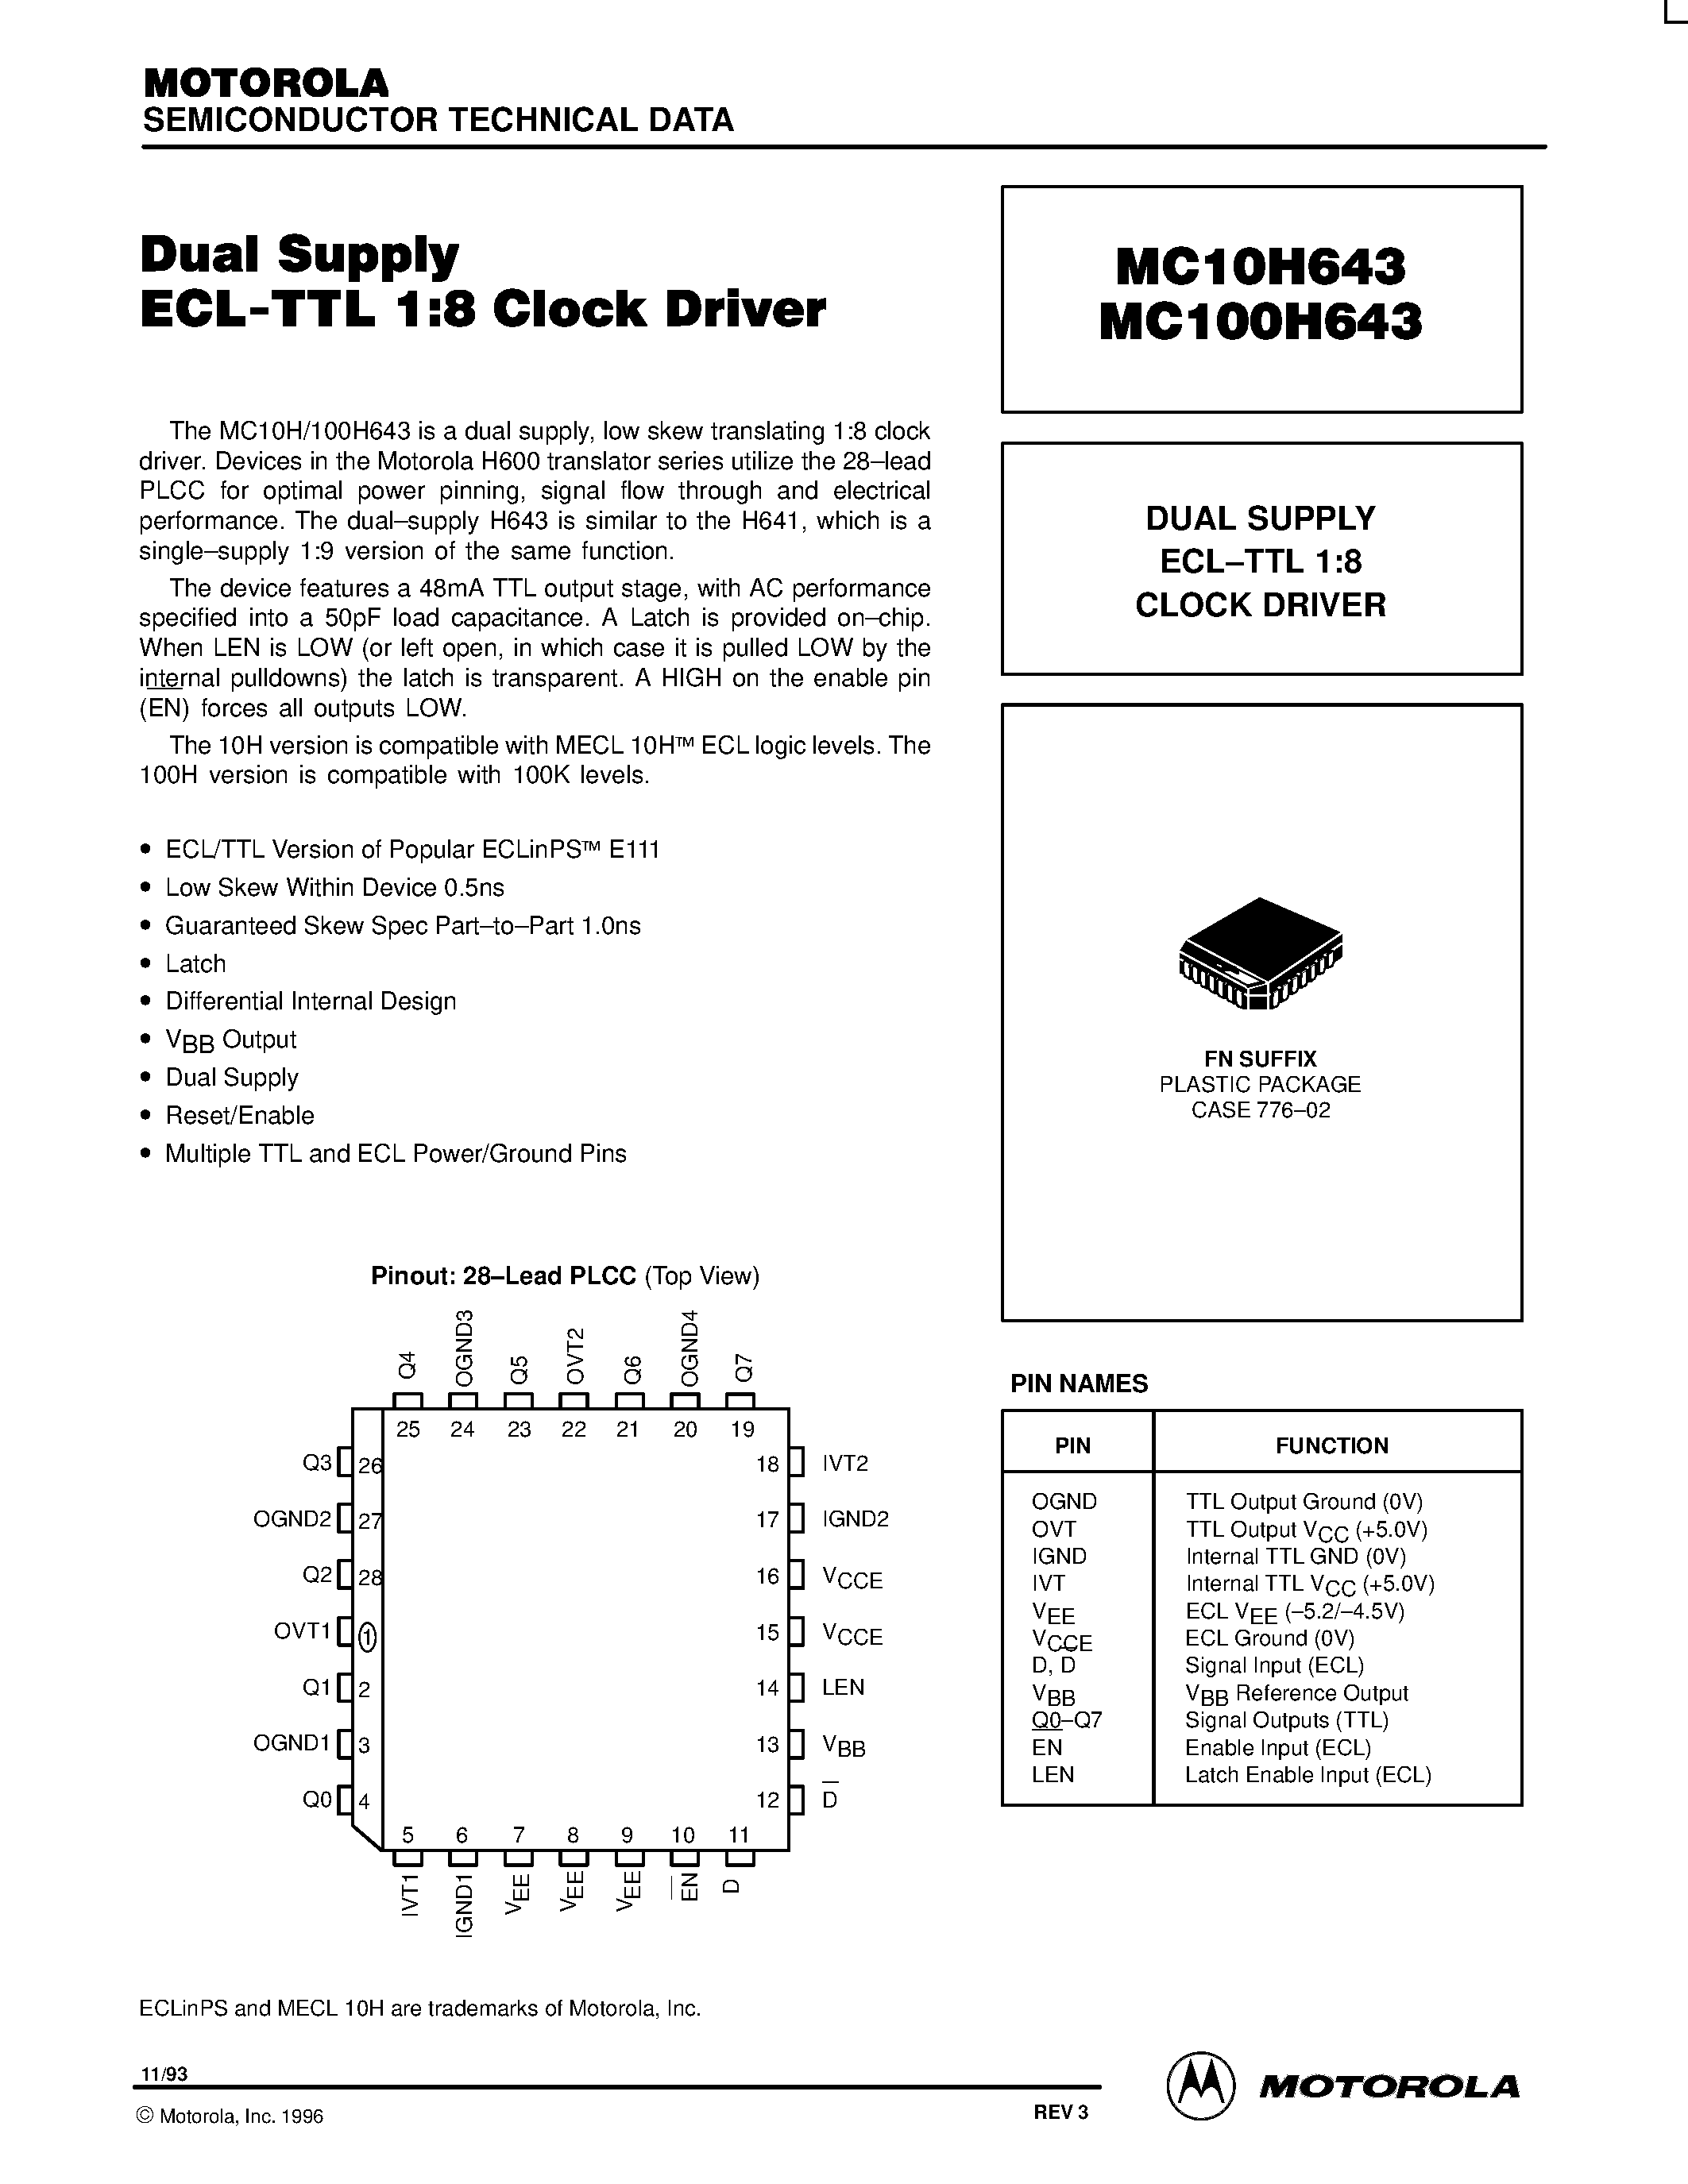 Даташит MC10H643FN - DUAL SUPPLY ECL-TTL 1:8 CLOCK DRIVER страница 1